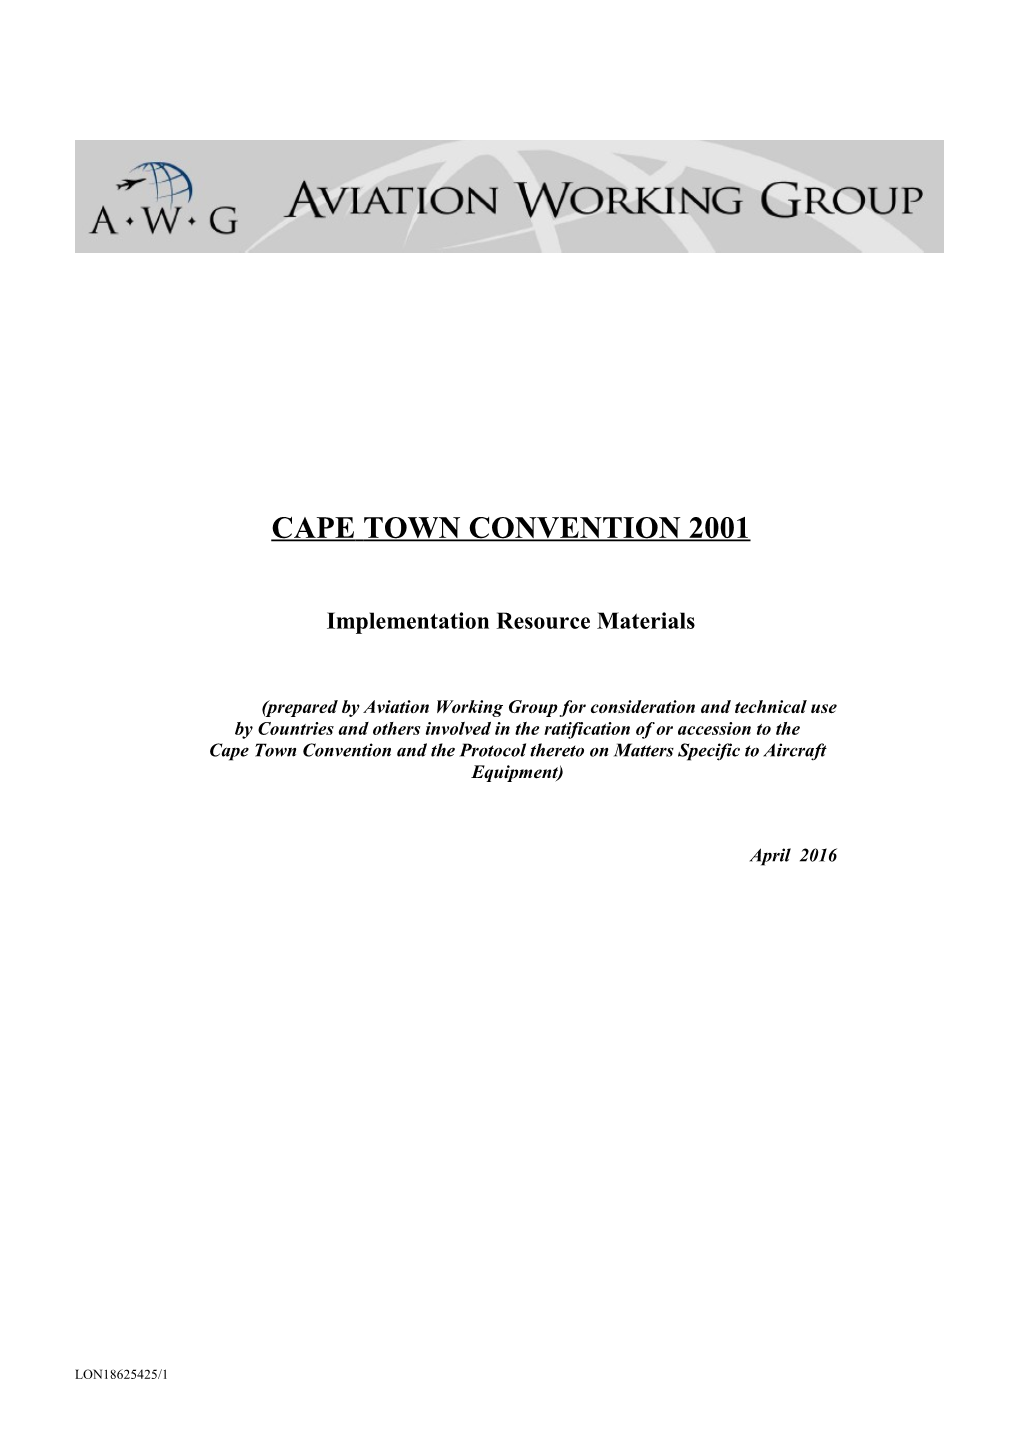 Capetown Convention 2001